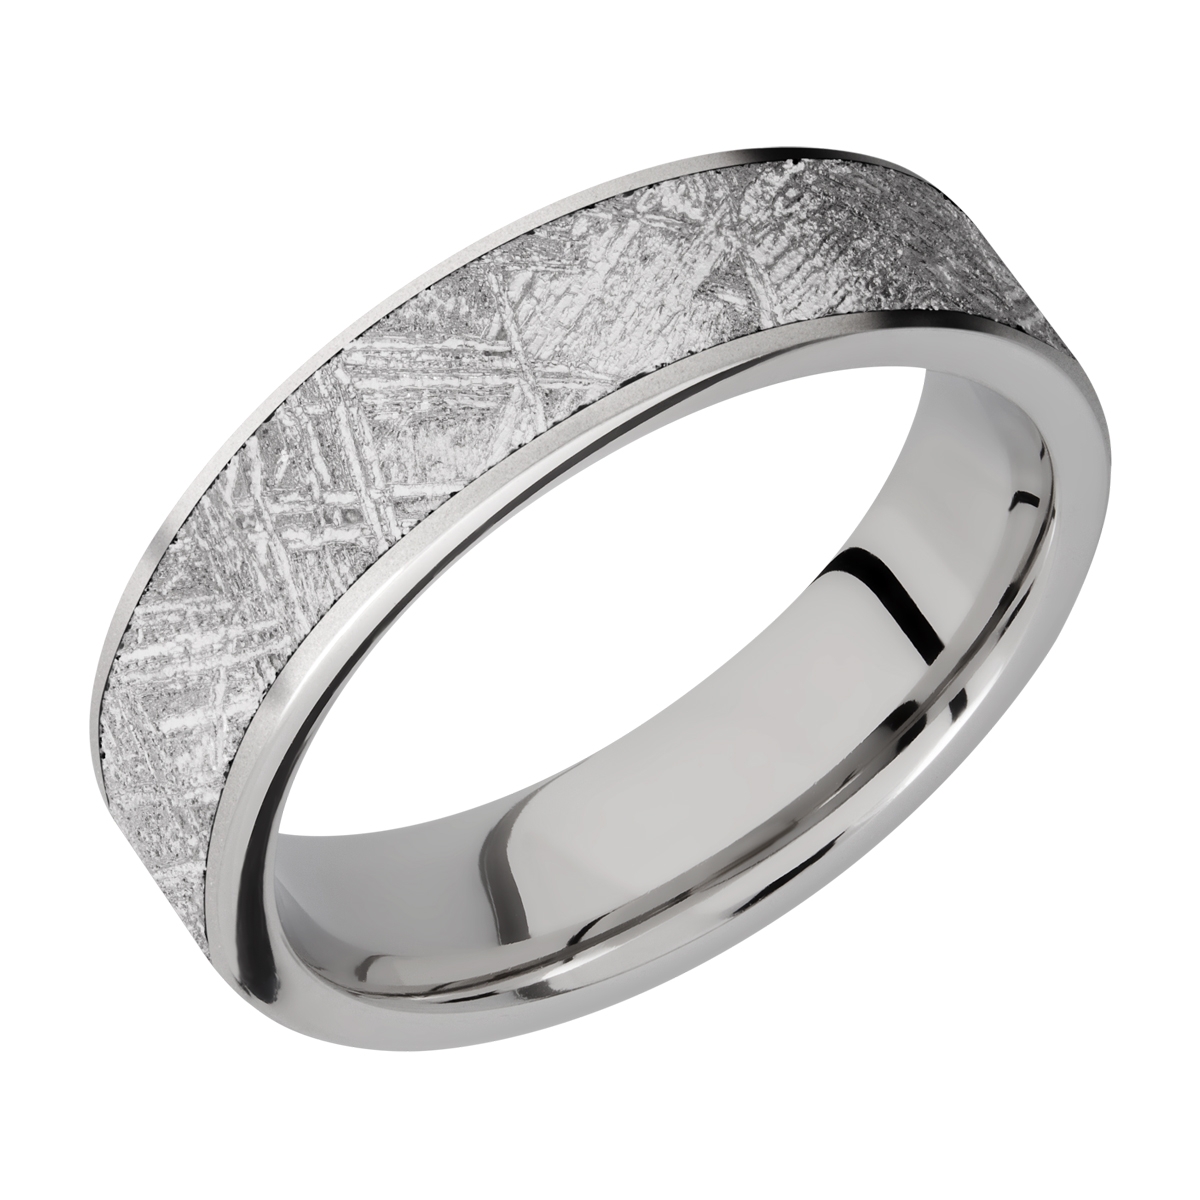 Lashbrook 6F15/METEORITE Titanium Wedding Ring or Band